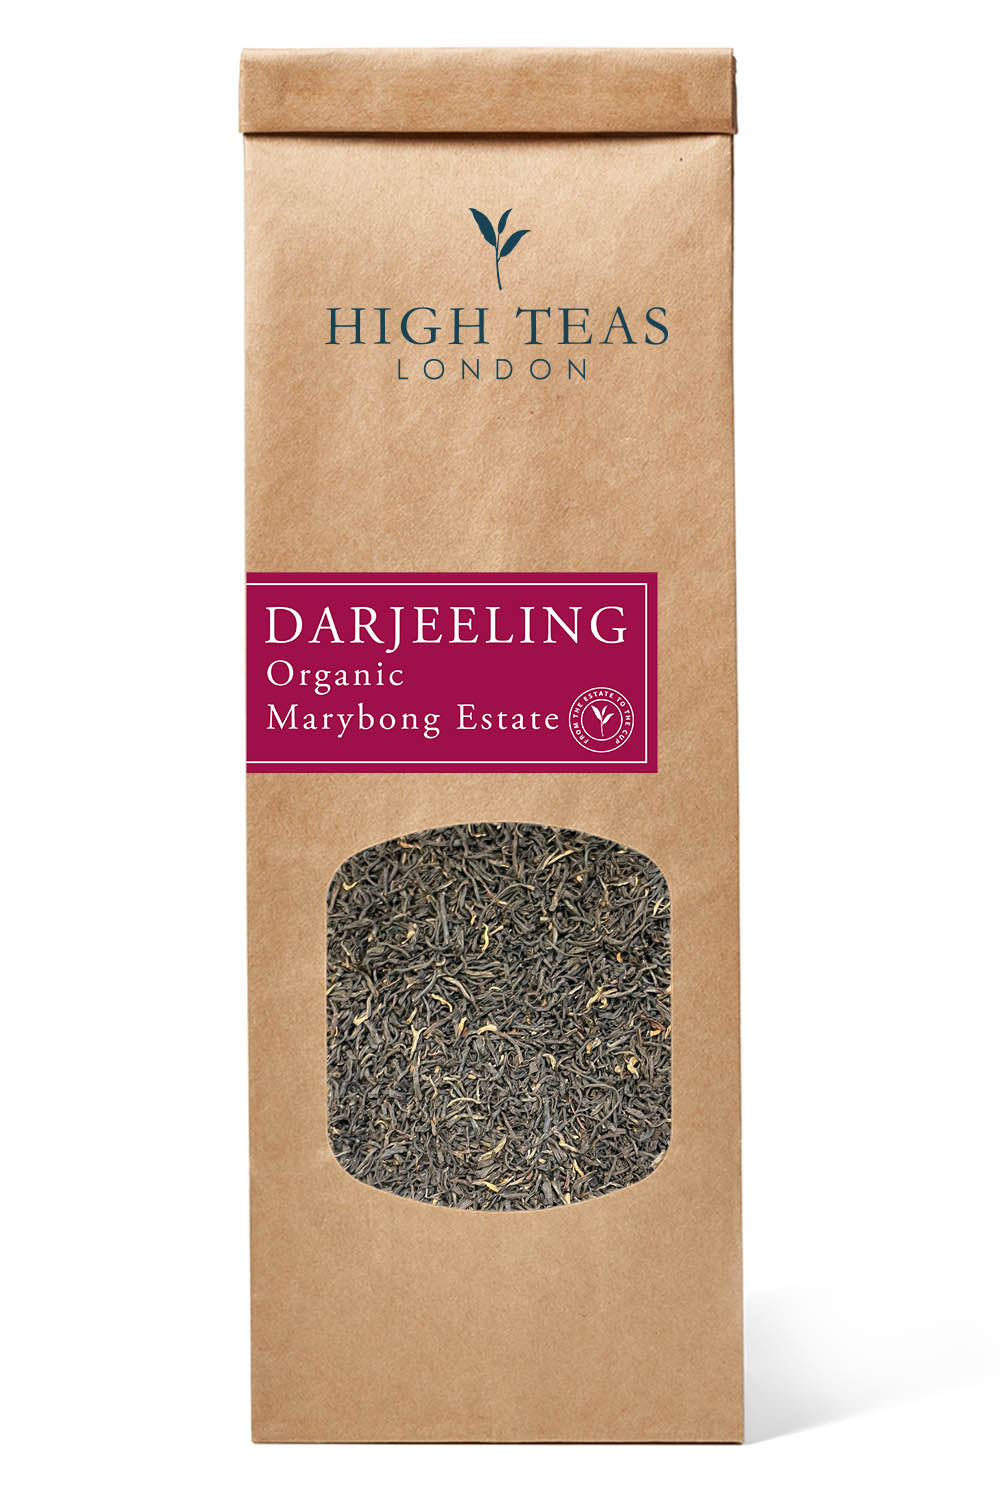 Darjeeling Organic Marybong Estate-50g-Loose Leaf Tea-High Teas